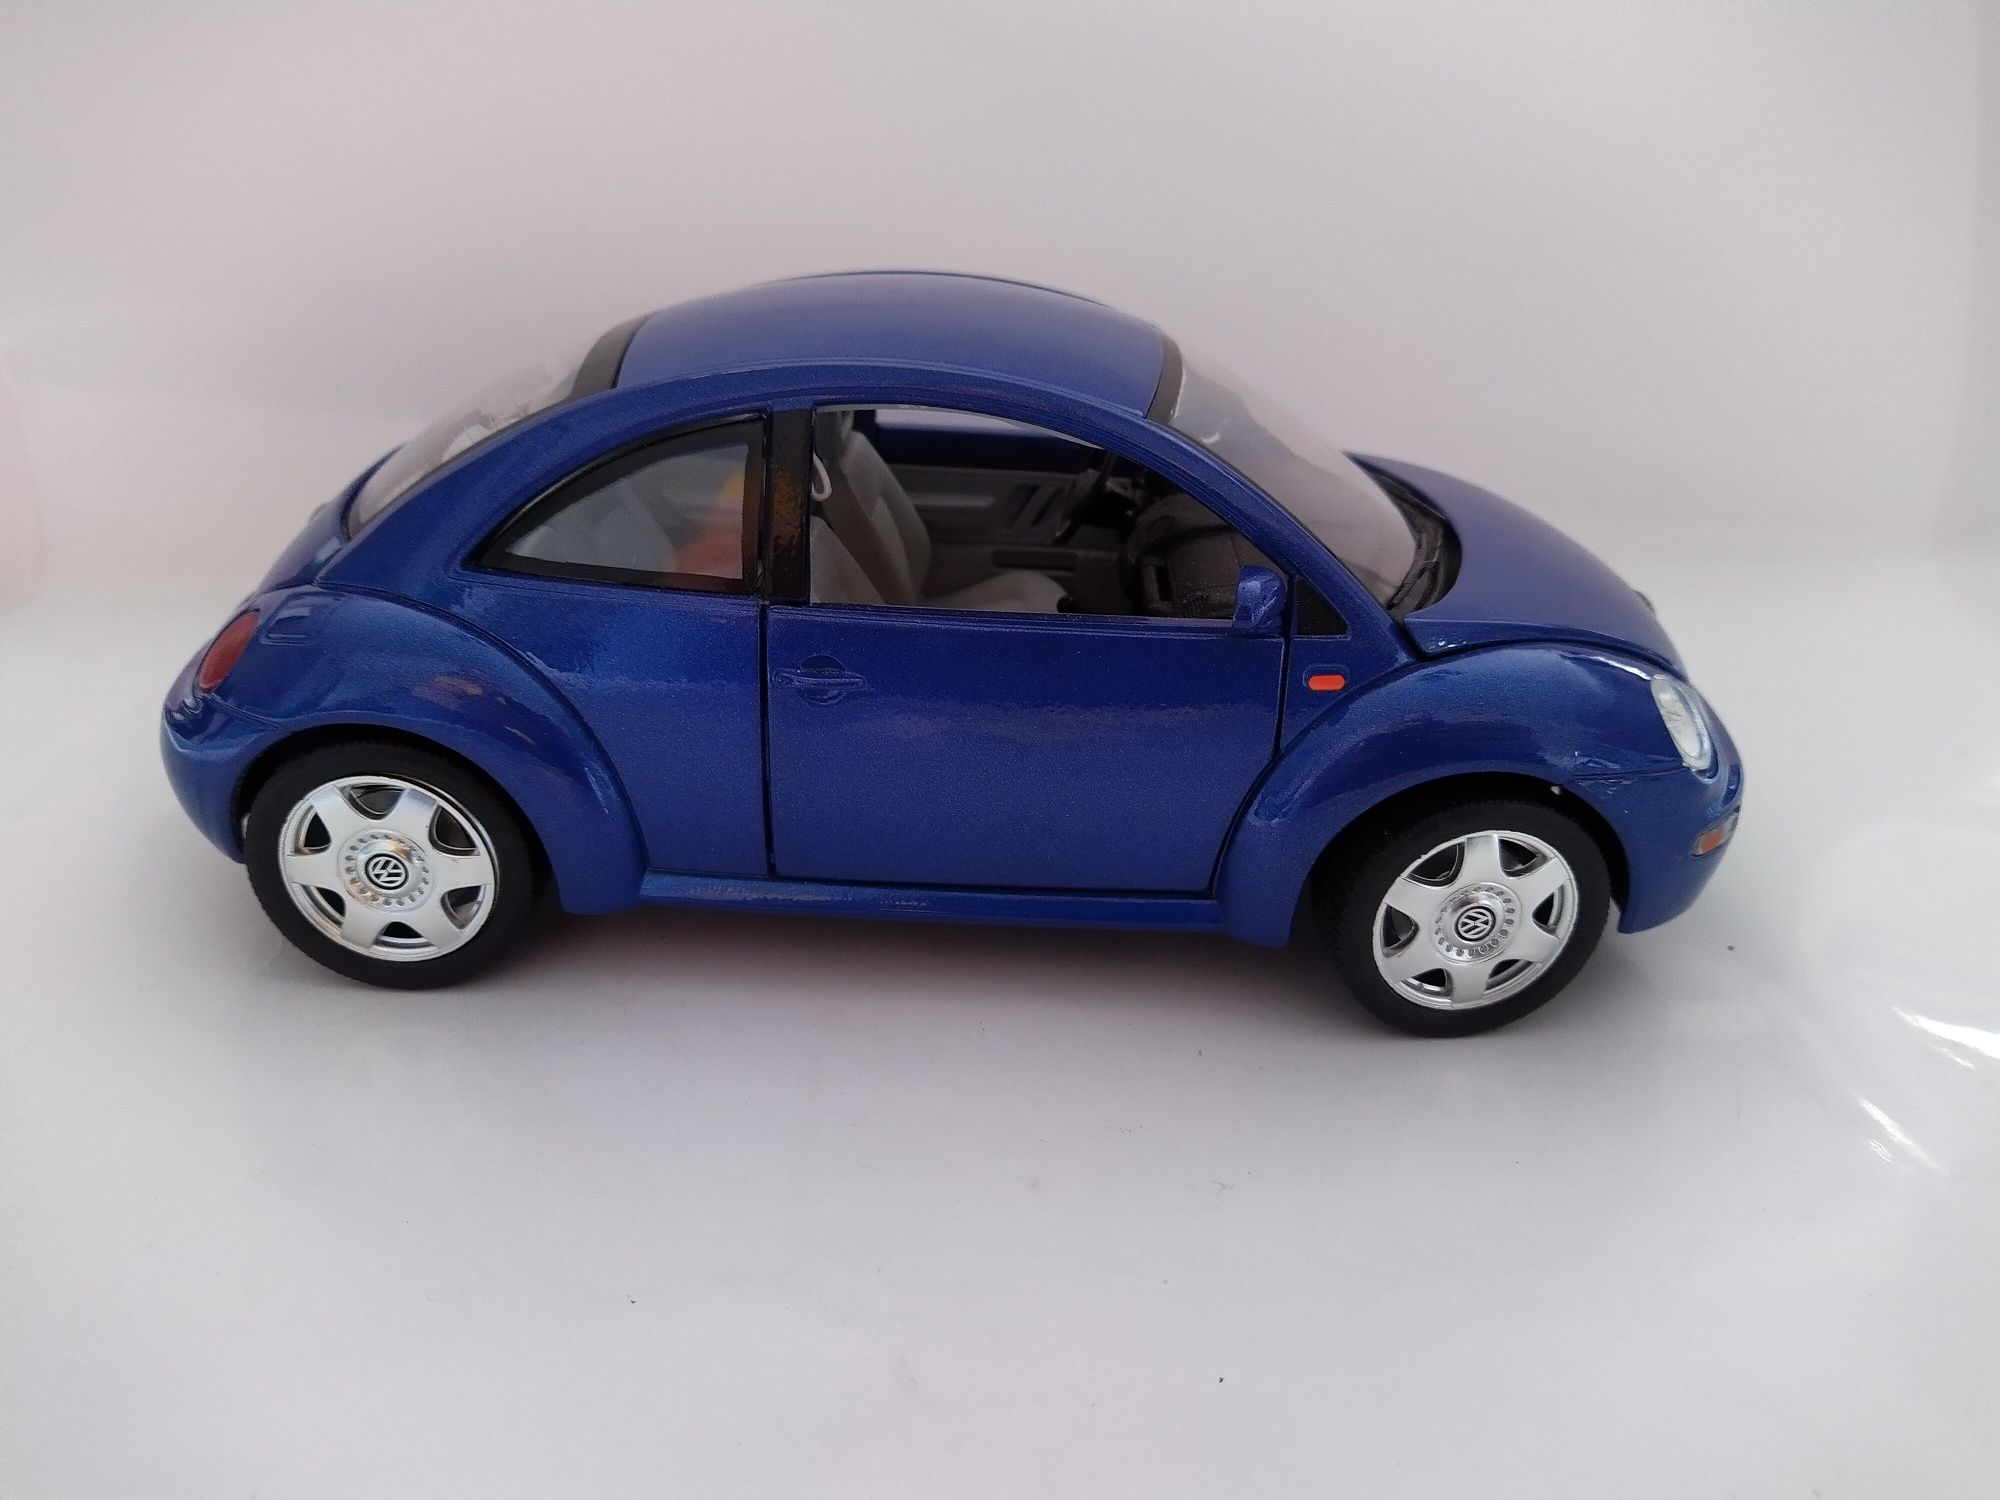 VW Volkswagen New Beetle bburago burago Skala 1:18